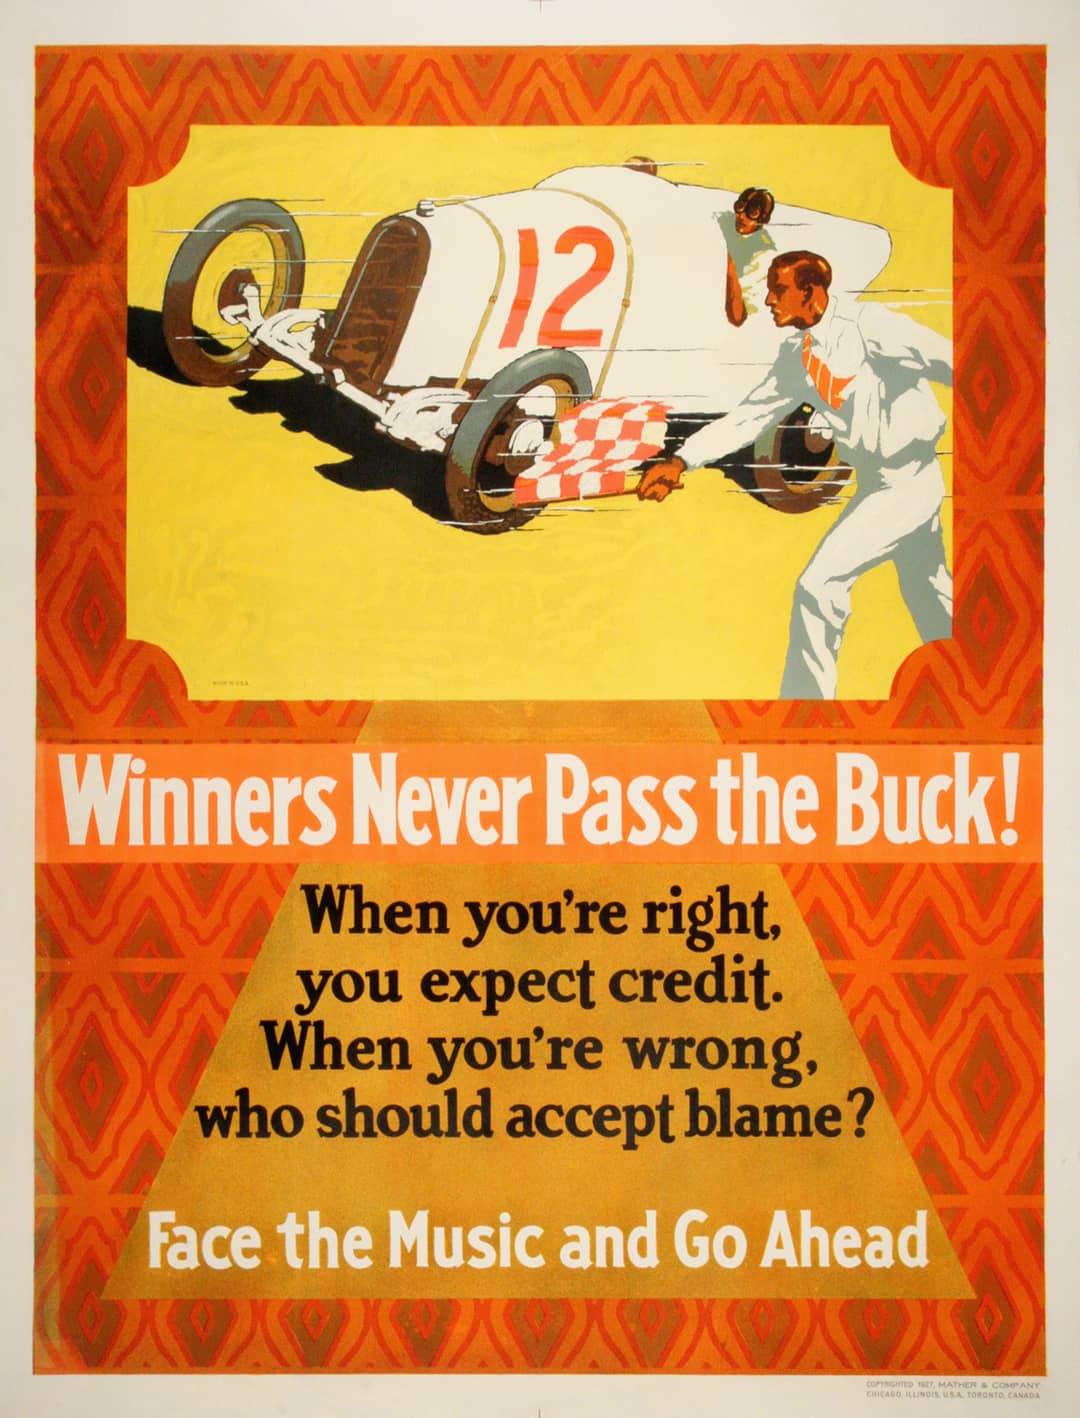 Original Mather Work Incentive Poster  1927 - Winners Never Pass the Buck